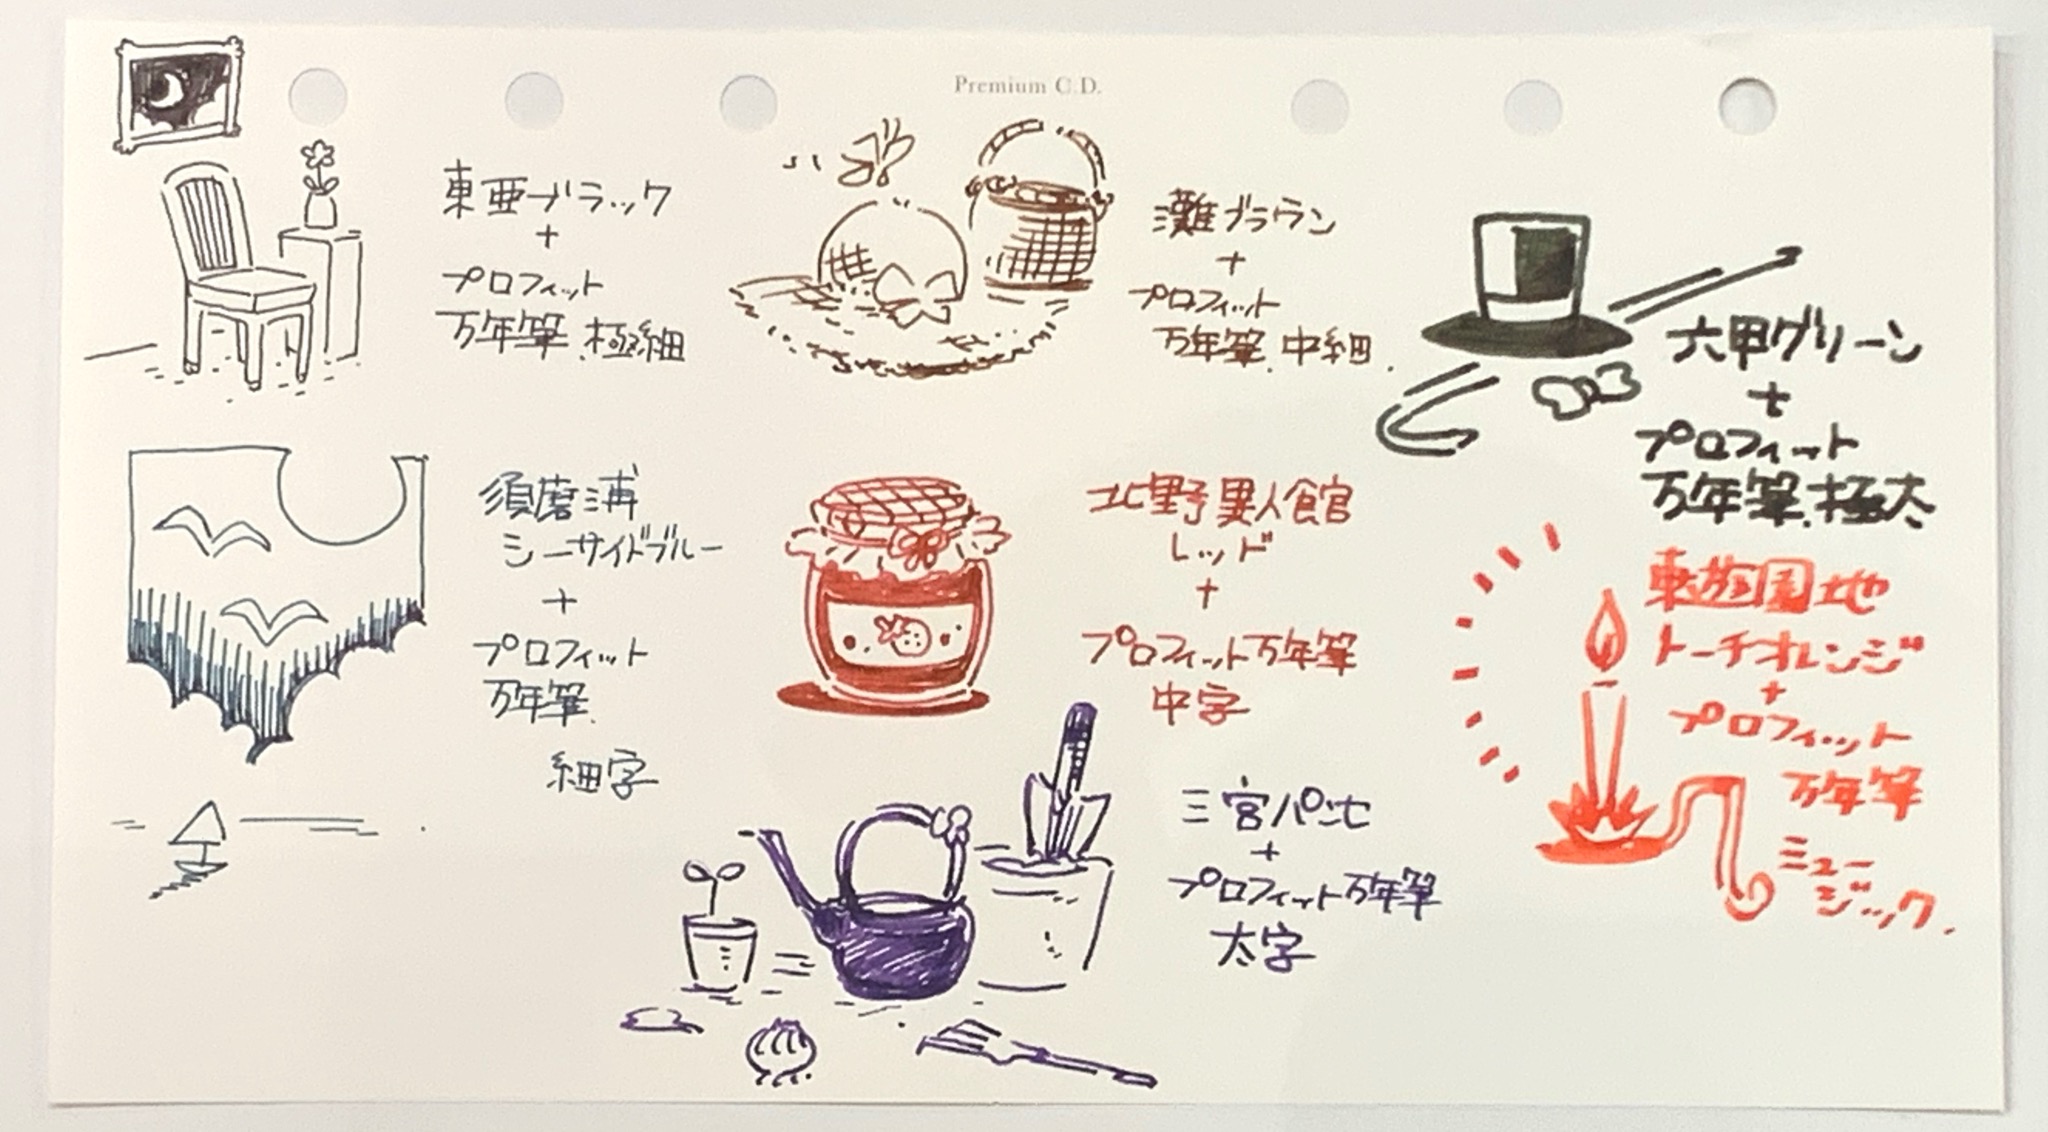 Kobeink物語bynagasawa お店の試筆用万年筆でイラストを描いてみました 当店では色々な万年筆がお試し頂けます 字を書くも良し絵を描くも良し 色んな楽しみ方でお好みのペンを見つけて下さいね Kobeink物語 北野工房のまち 万年筆 万年筆